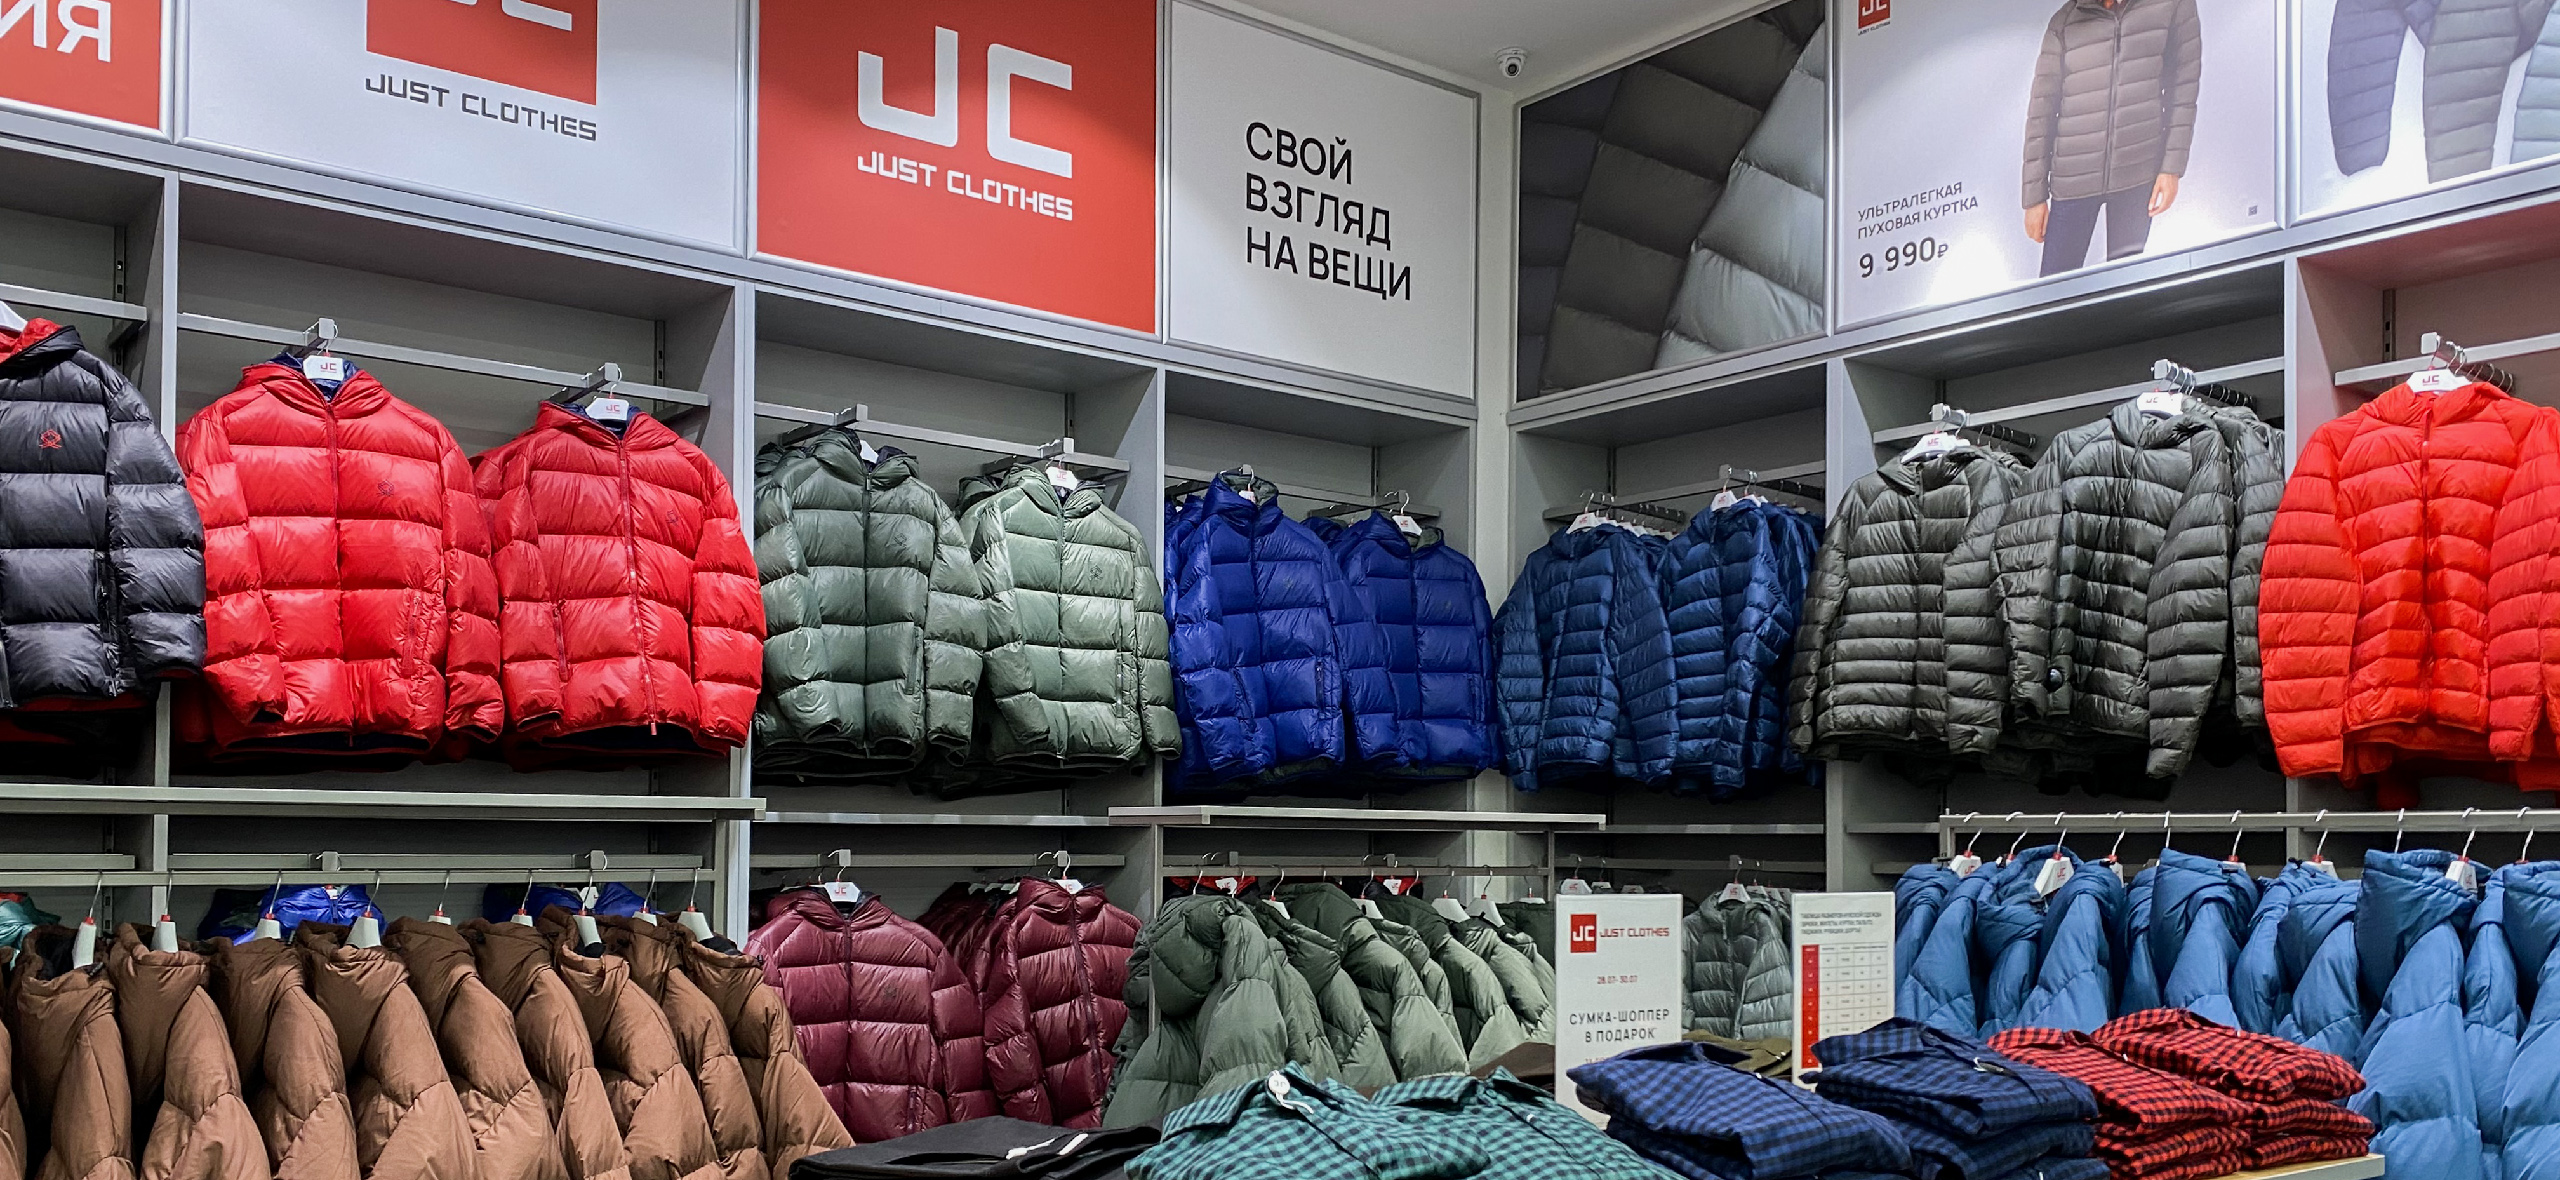 Just Clothes вместо Uniqlo: что за одежду там продают, каталог и цены бренда